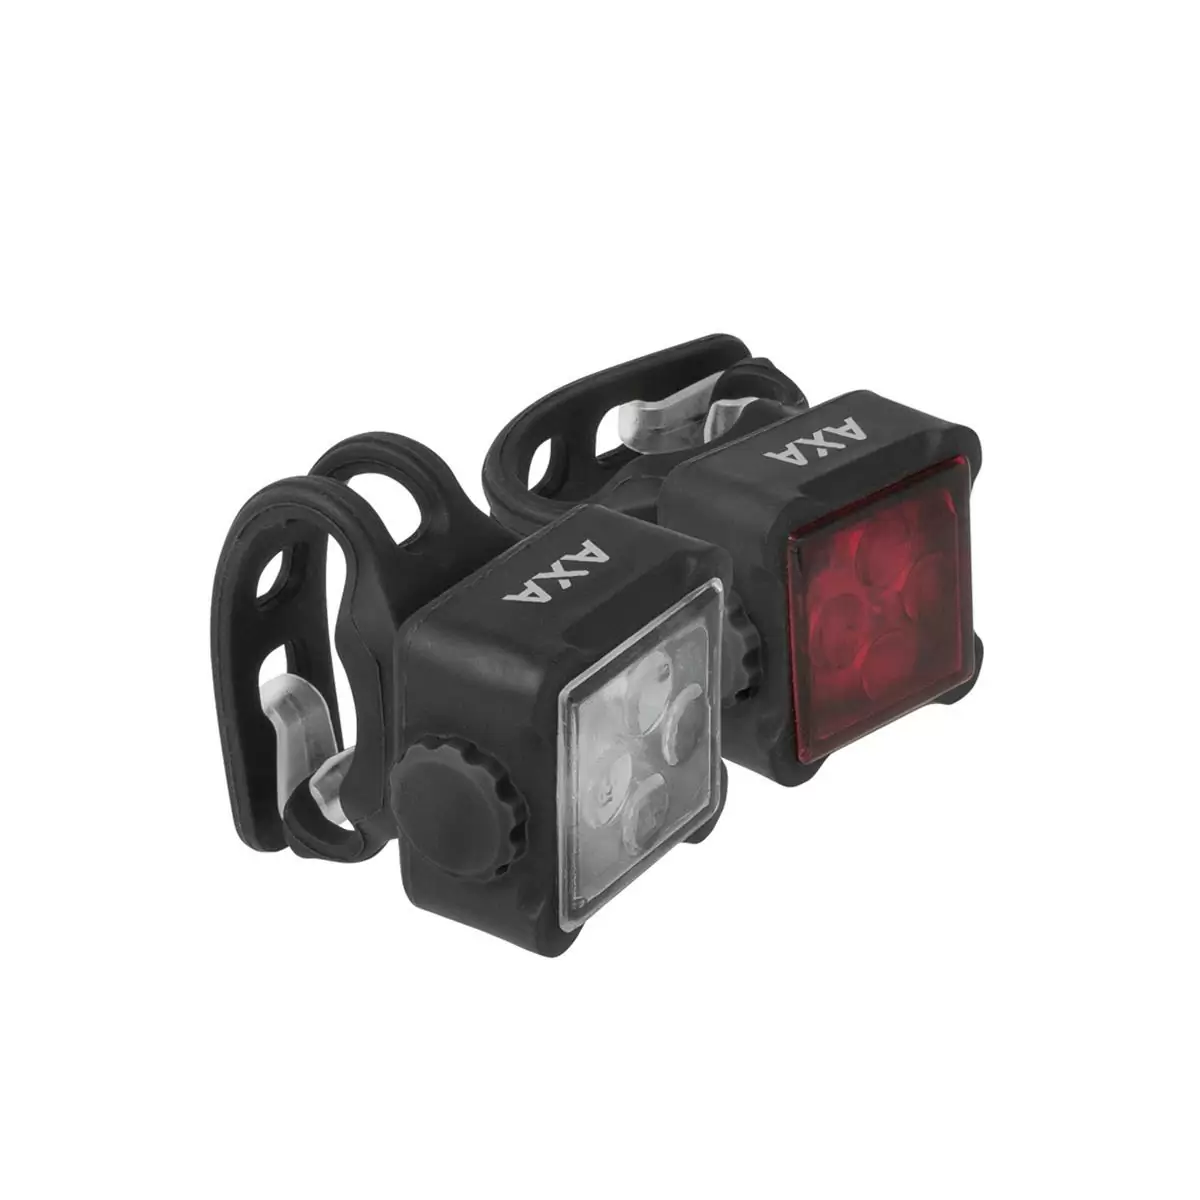 Kit Niteline 44-R luz delantera y trasera USB - image